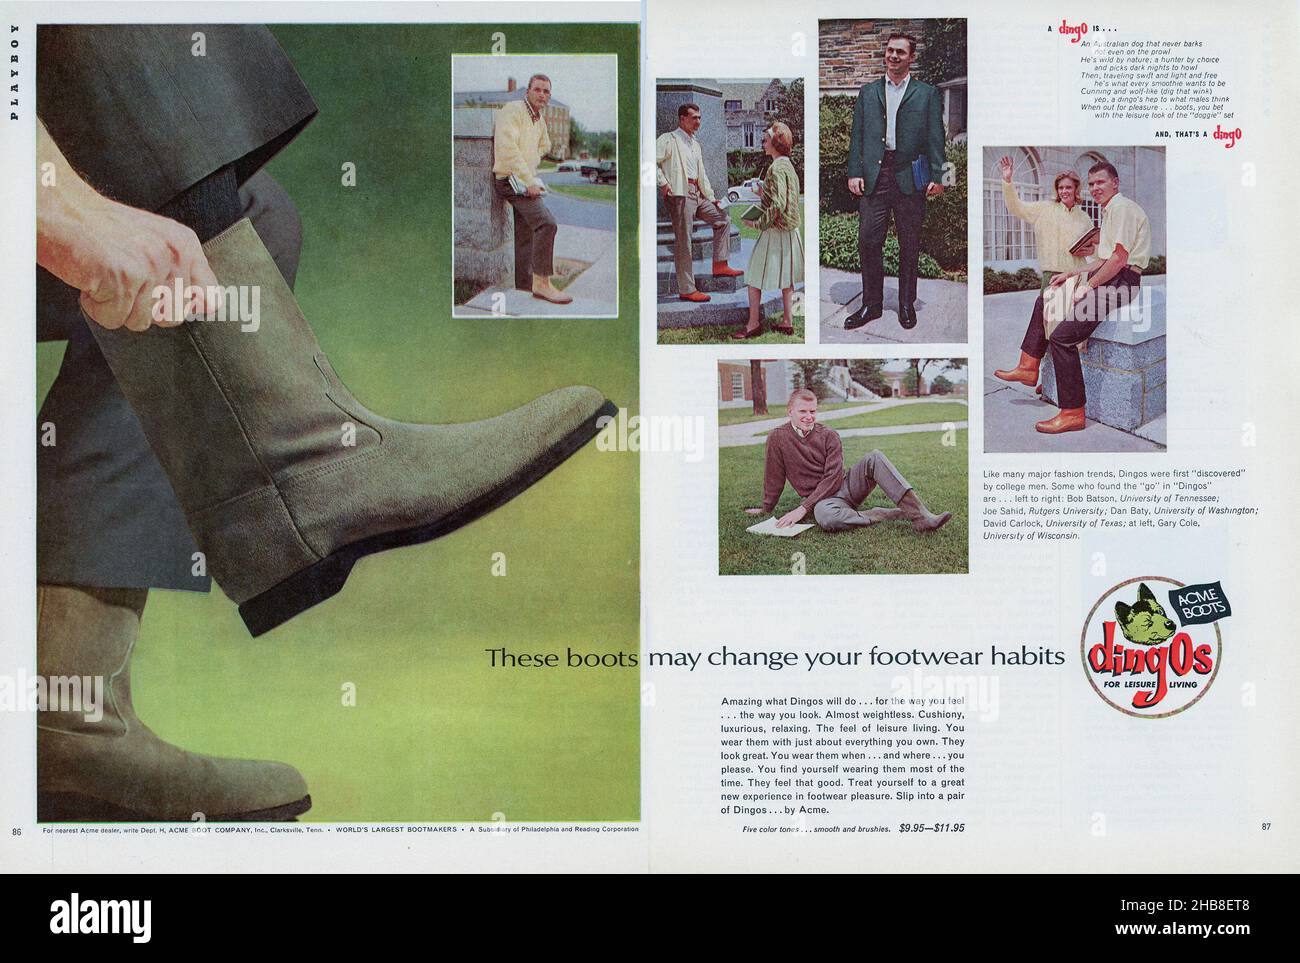 Vintage September 1964 'Playboy' magazine advertisement, USA Stock Photo